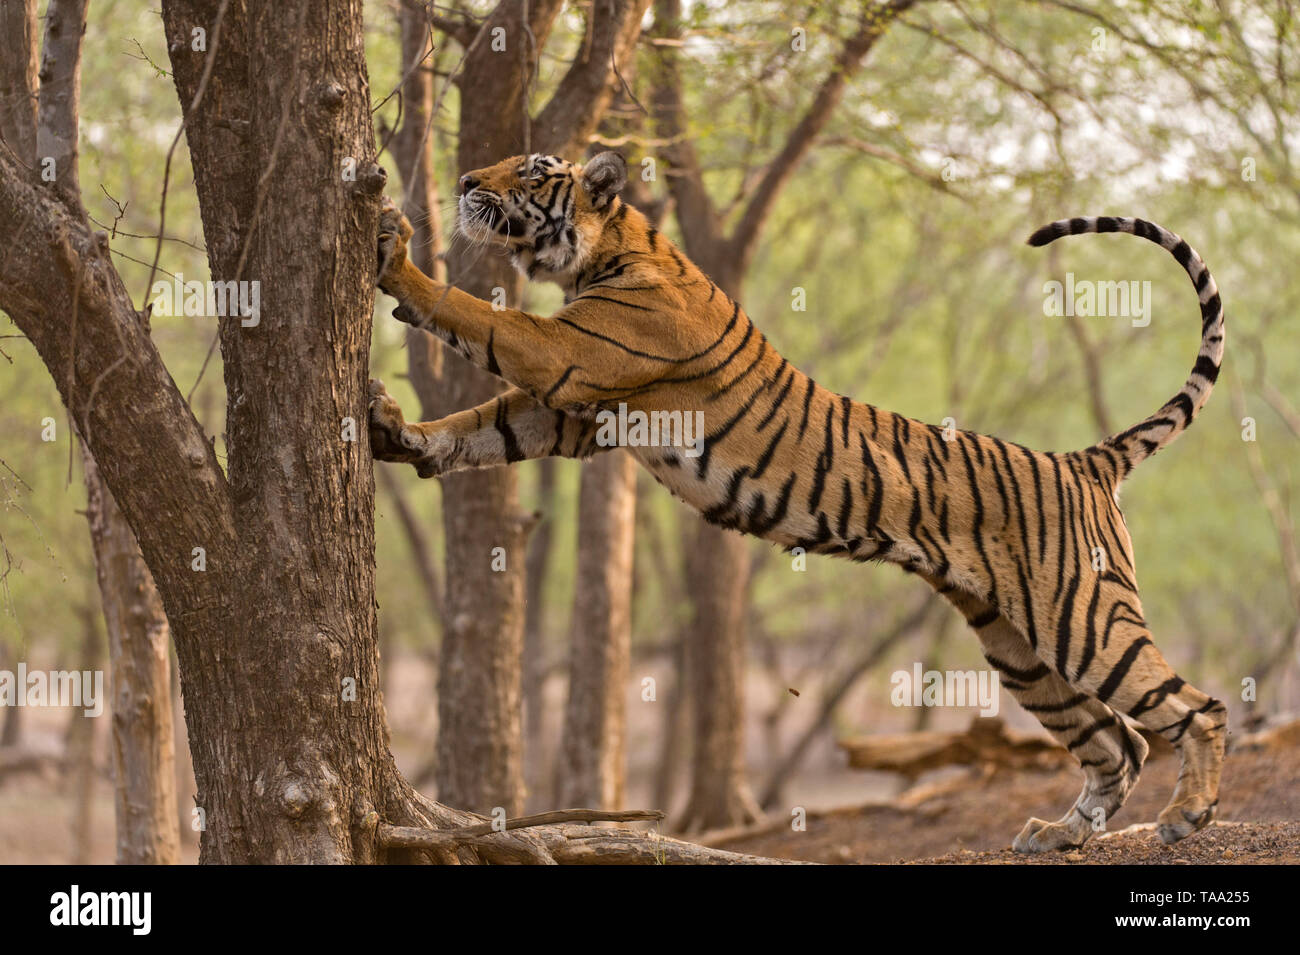 Tiger marquage sur tronc d'arbre, Ranthambhore national park, Rajasthan, Inde, Asie Banque D'Images